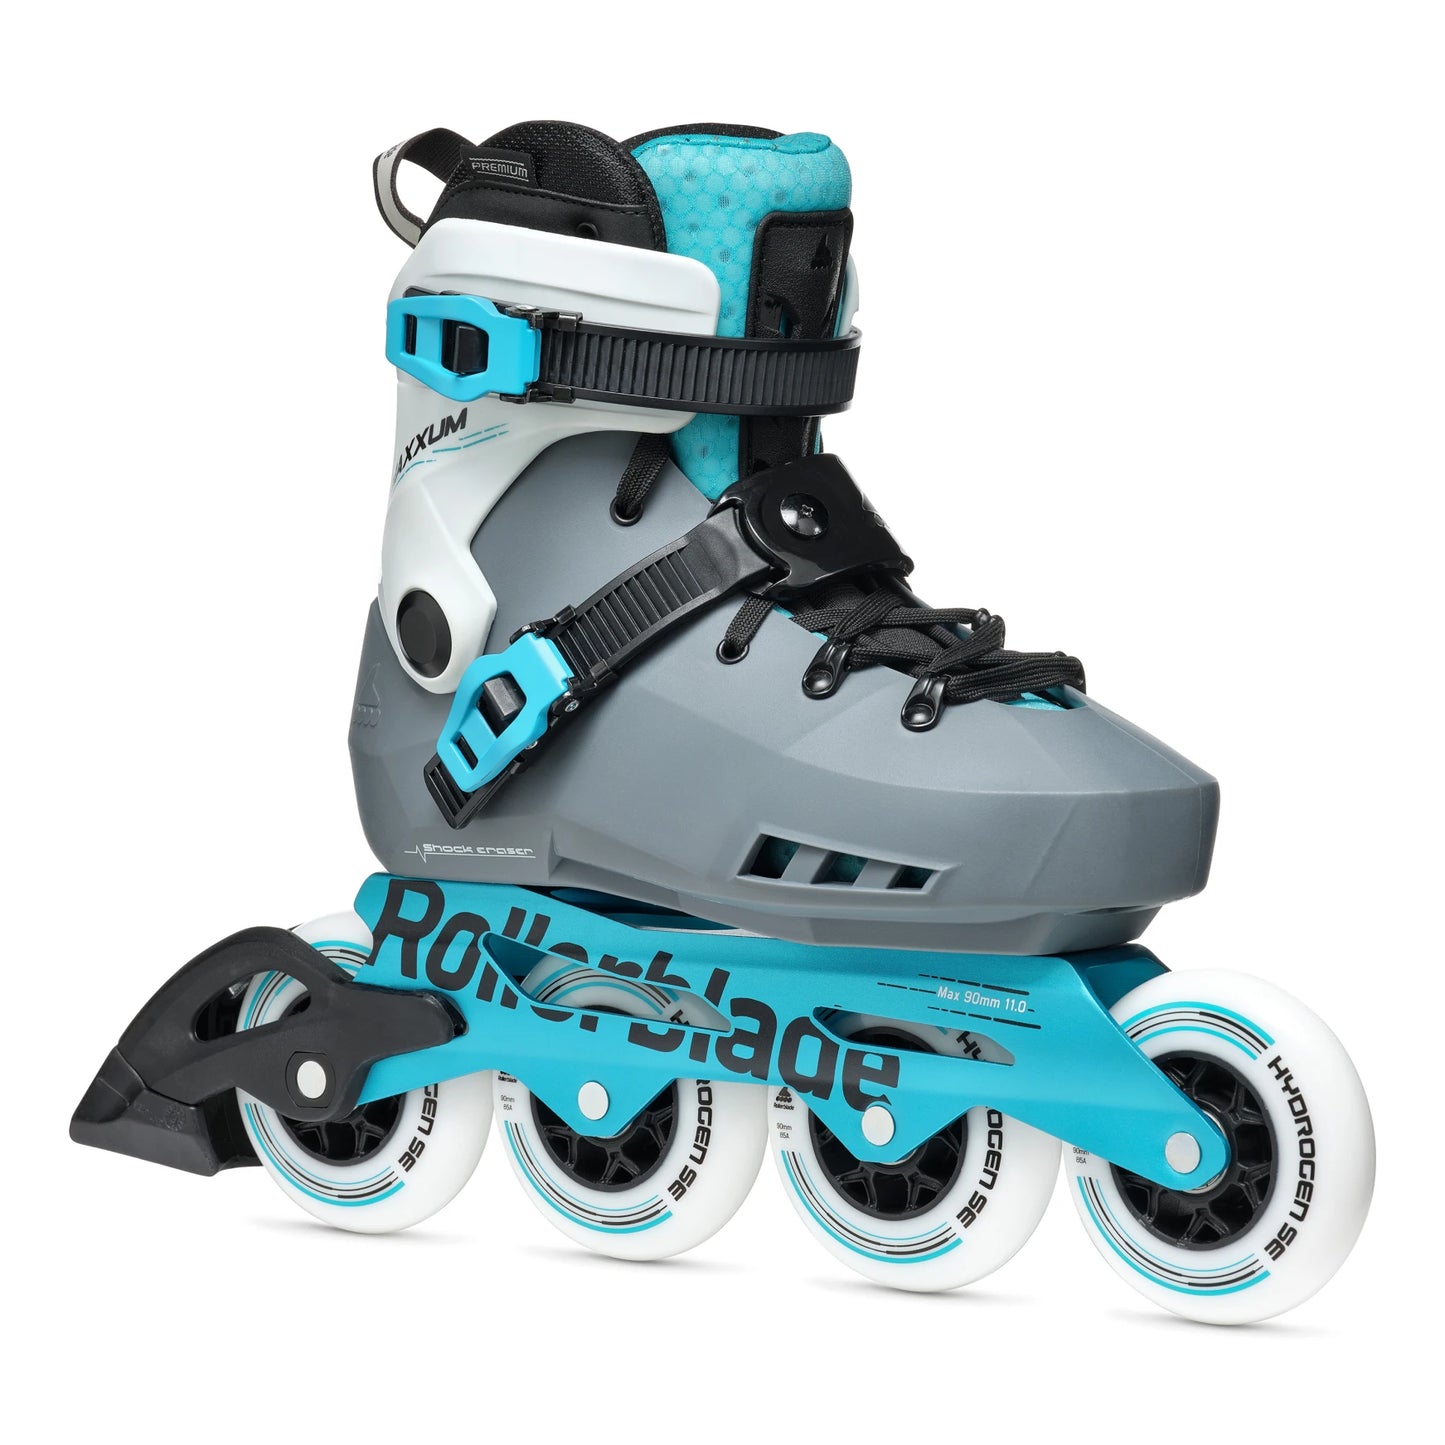 Maxxum XT man Rollerblade inline skate